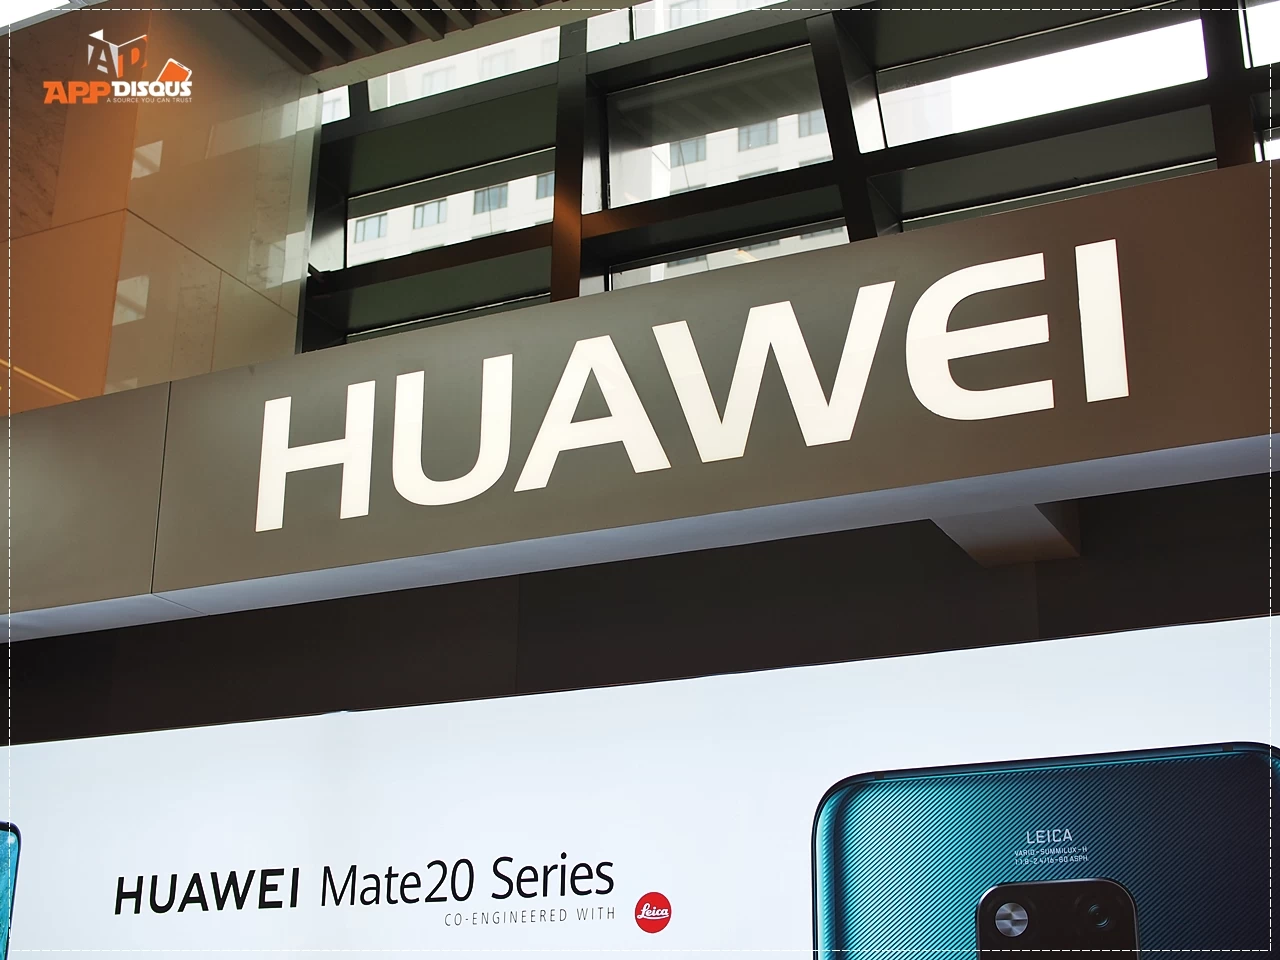 Huawei Grandsale 2019P6282239 | Huawei | โปรโมชั่นห้ามพลาด! Huawei จัดใหญ่แบบที่ไม่เคยมาก่อน เครื่องราคาพิเศษพร้อมของแถมเพียบ ลุ้นอีกต่อกับรถ BMW ราคากว่าสามล้าน!